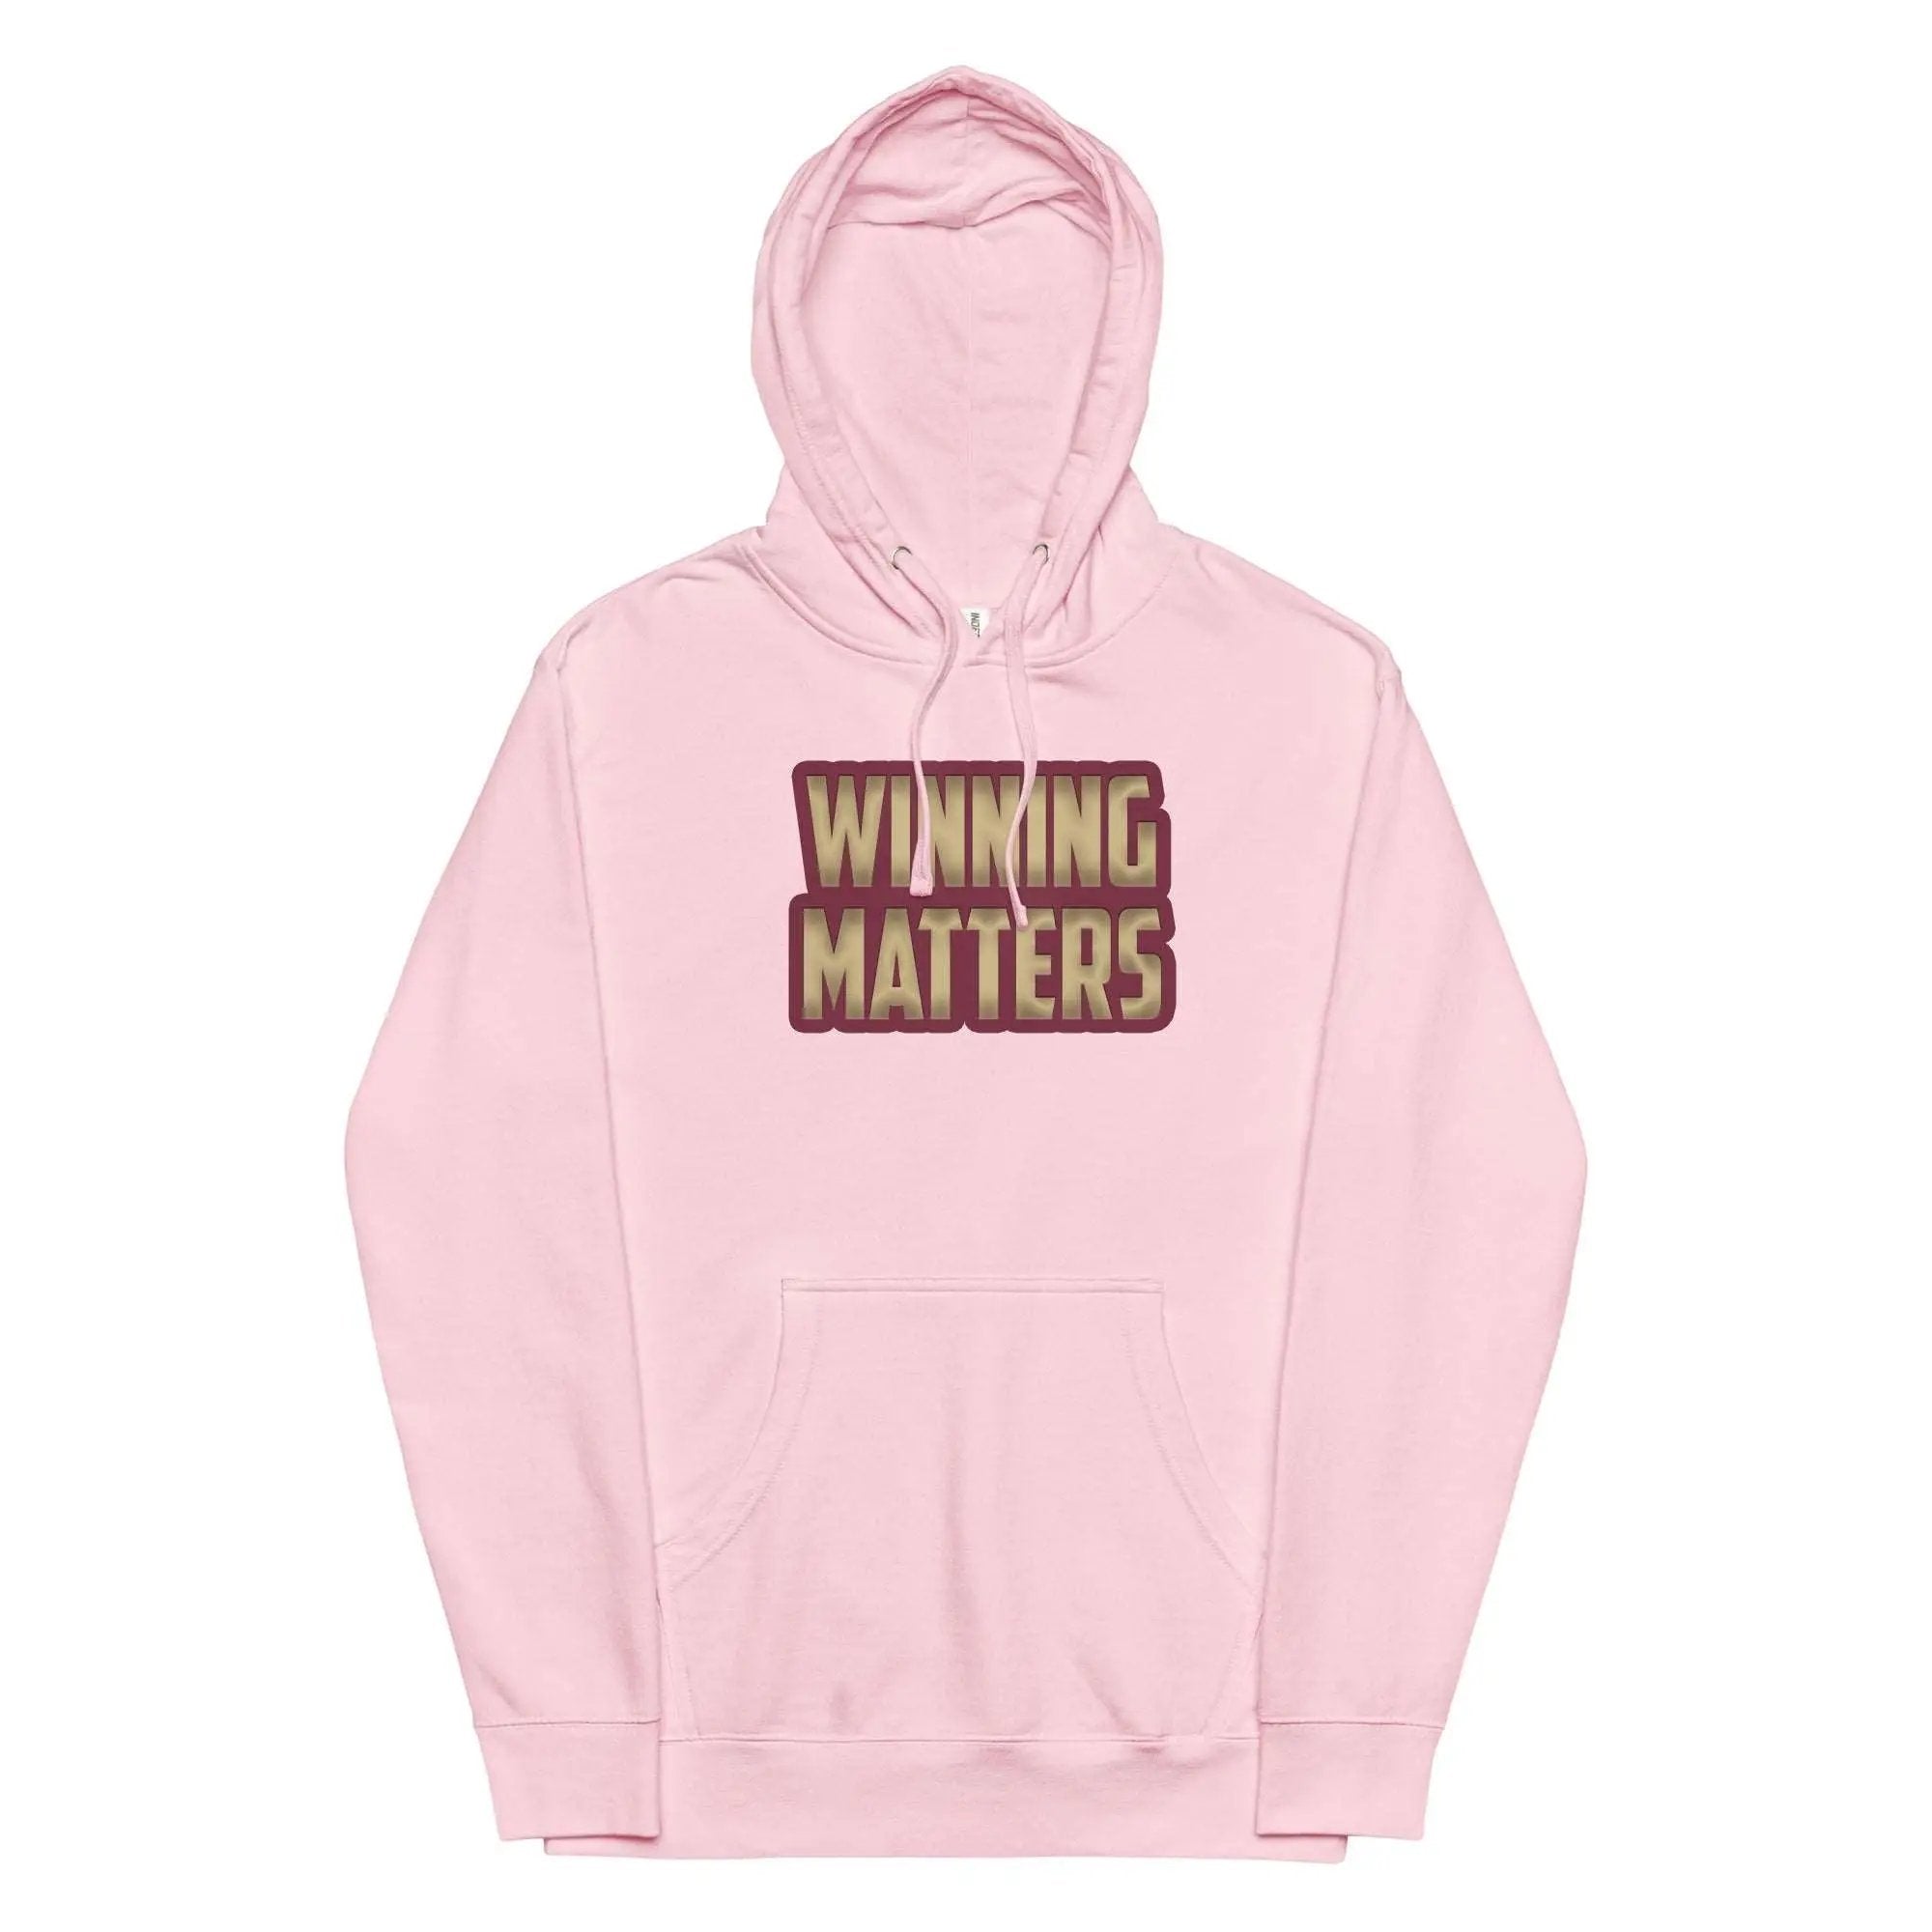 Winning Matters Unisex midweight hoodie